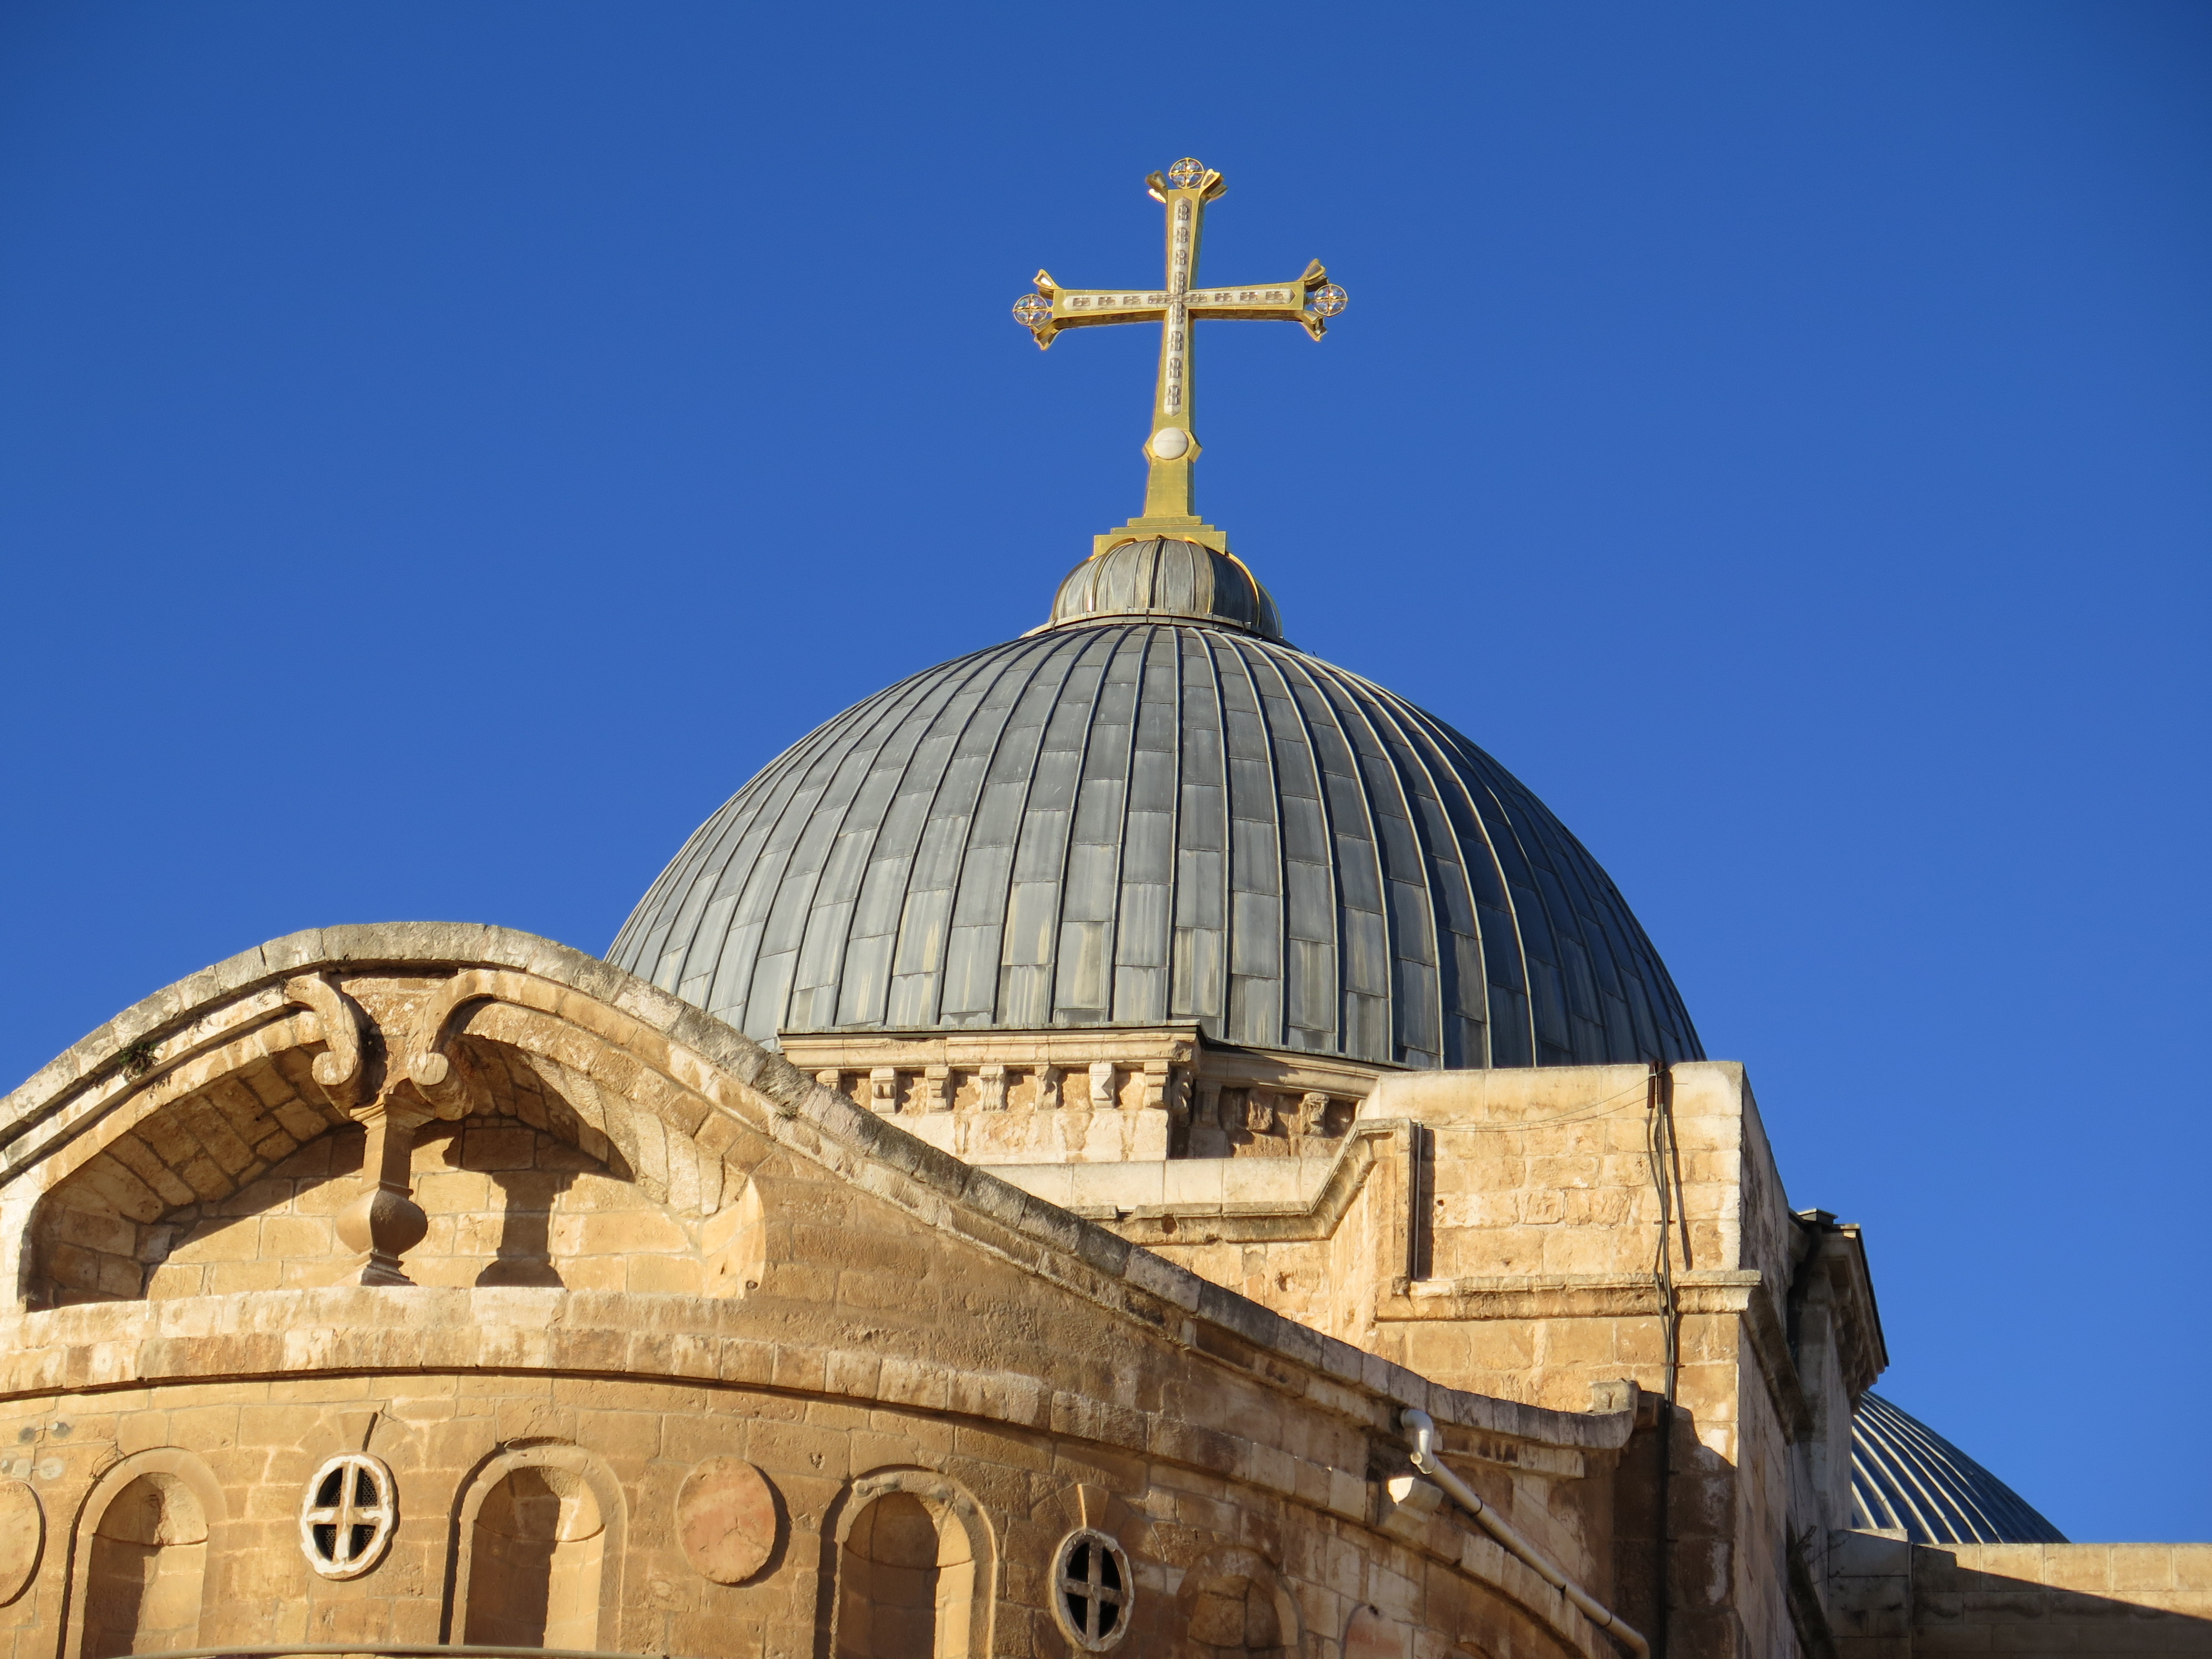 church of the holy sepulchre | PALESTINE : MYO | Pinterest | Churches